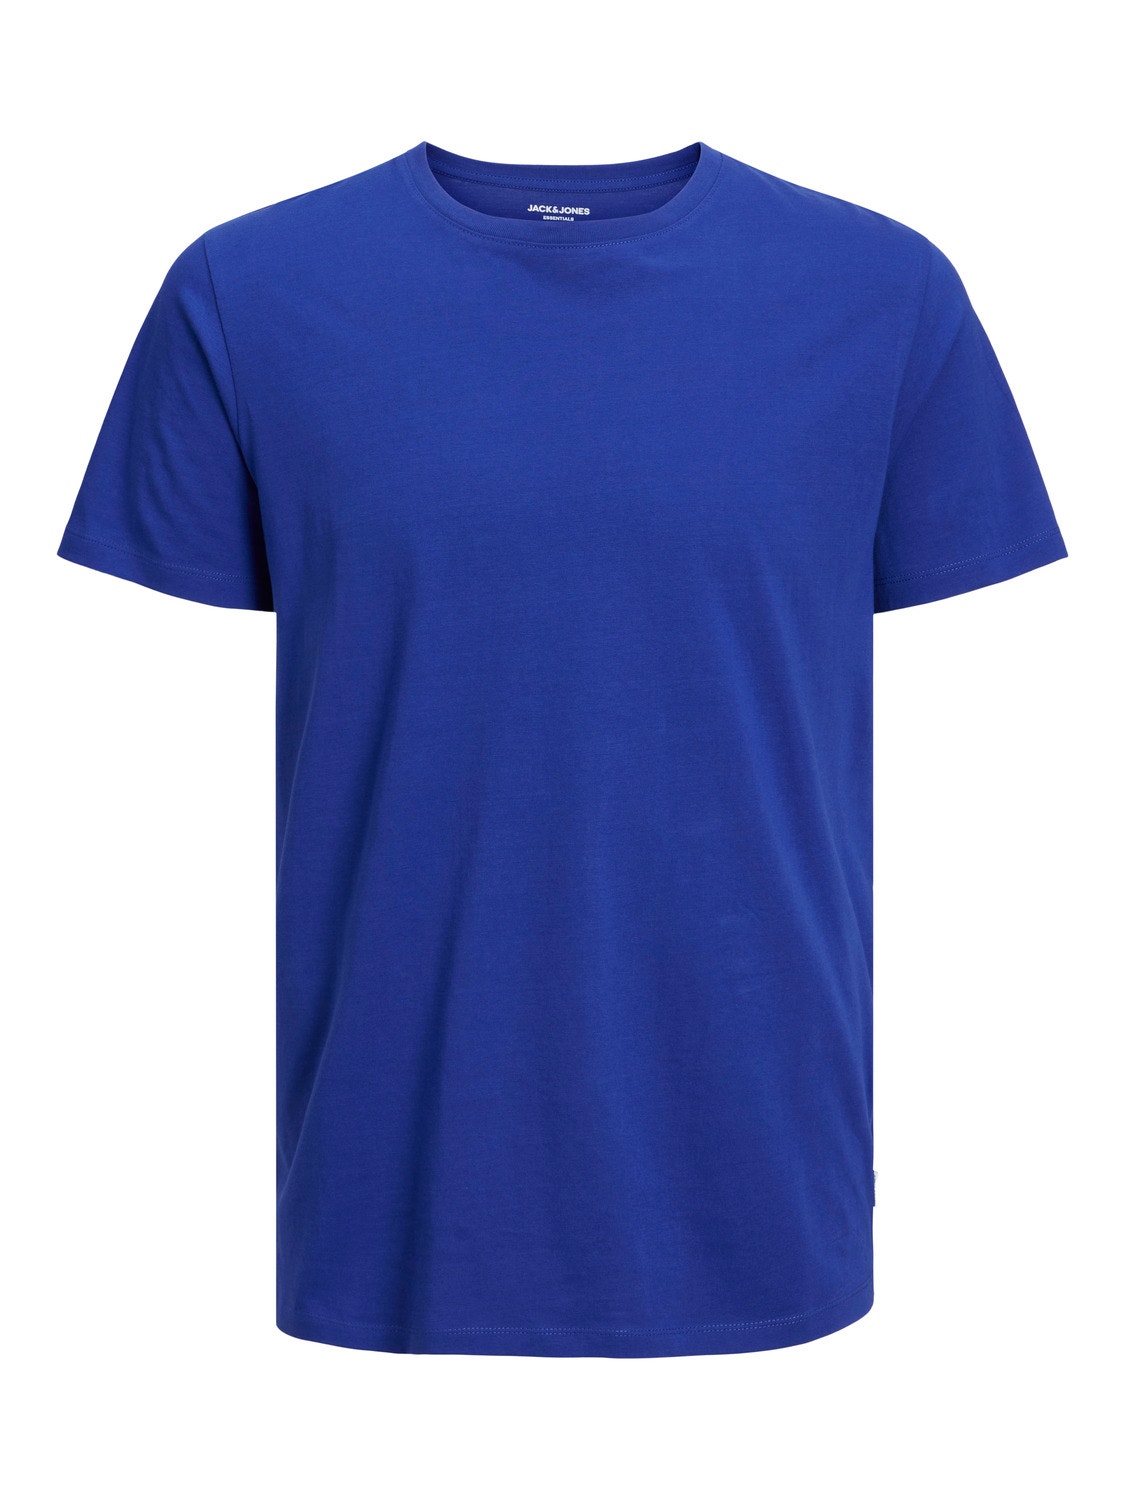 Jack & Jones Plain O-Neck T-shirt -Bluing - 12156101